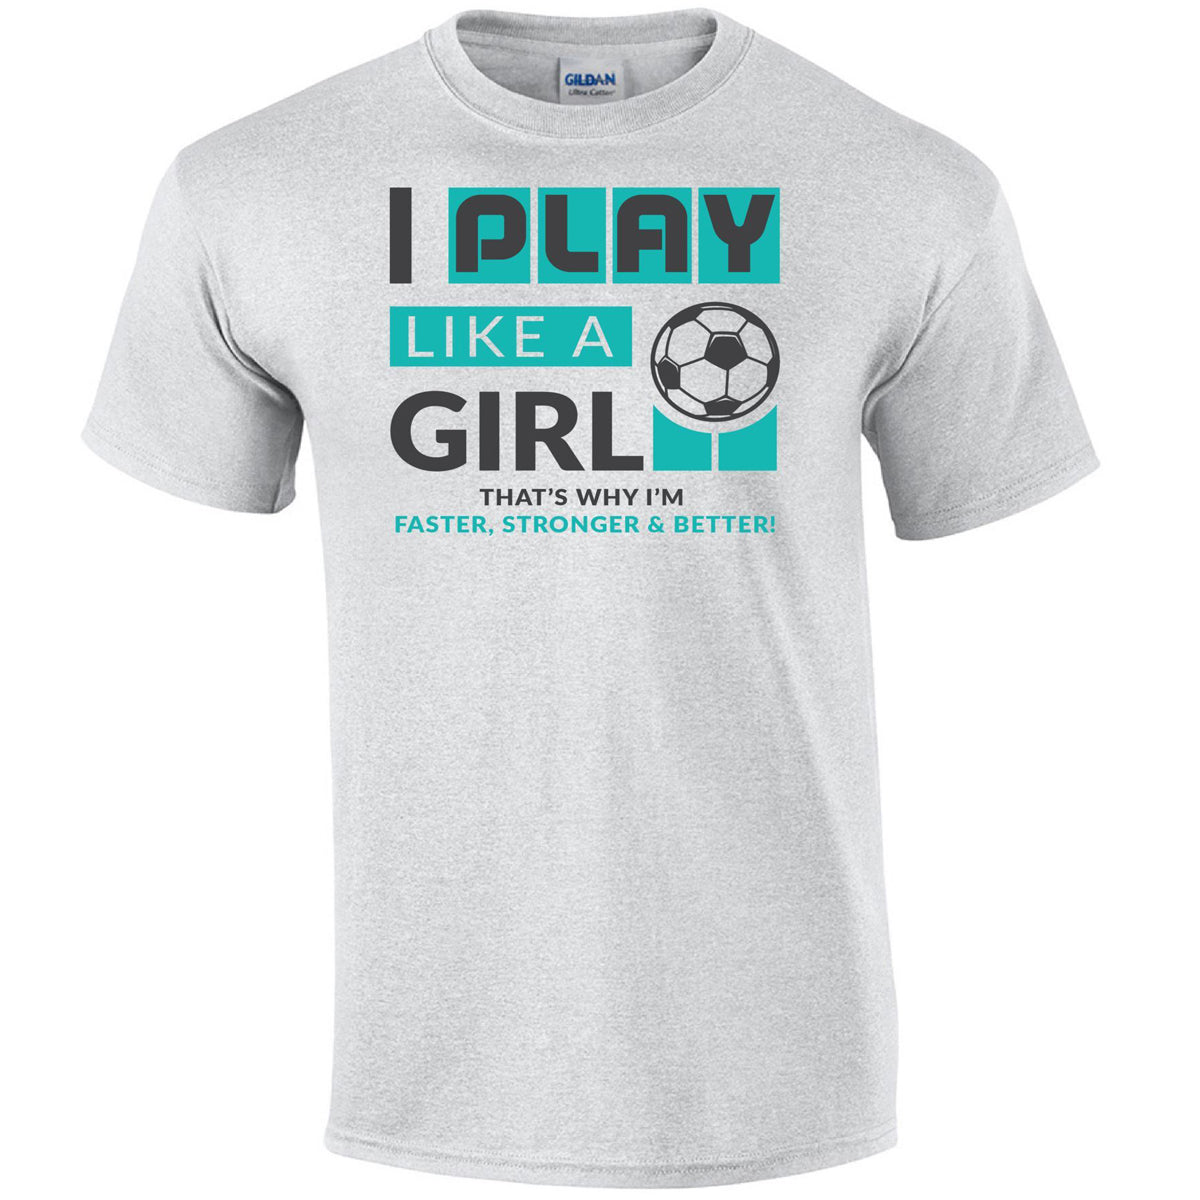 Play Like A Girl Soccer Tee Humorous Shirt 411 Youth Medium Ash Youth